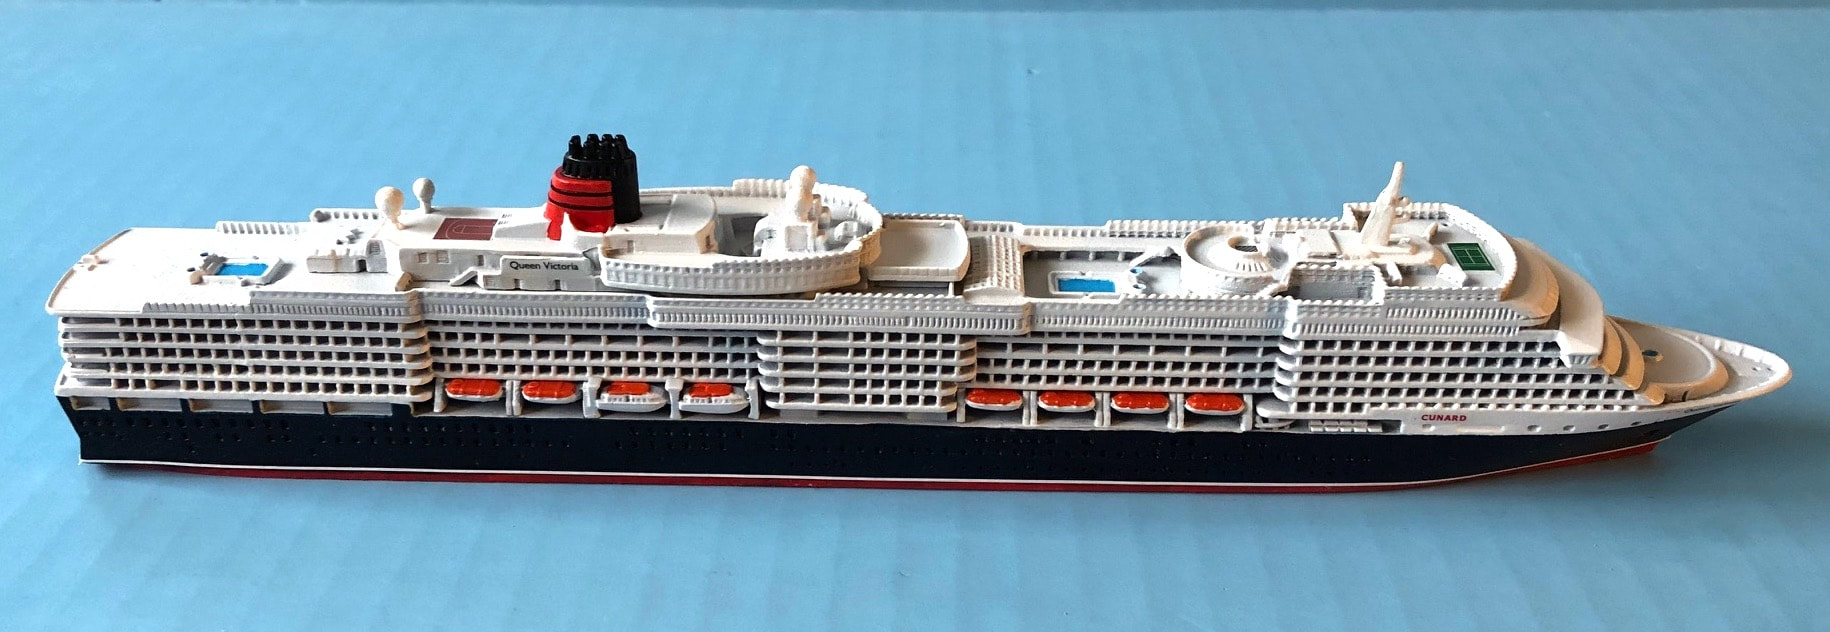 Queen Victoria cruise ship model in scale 1:1250, Cunard Line, Picture